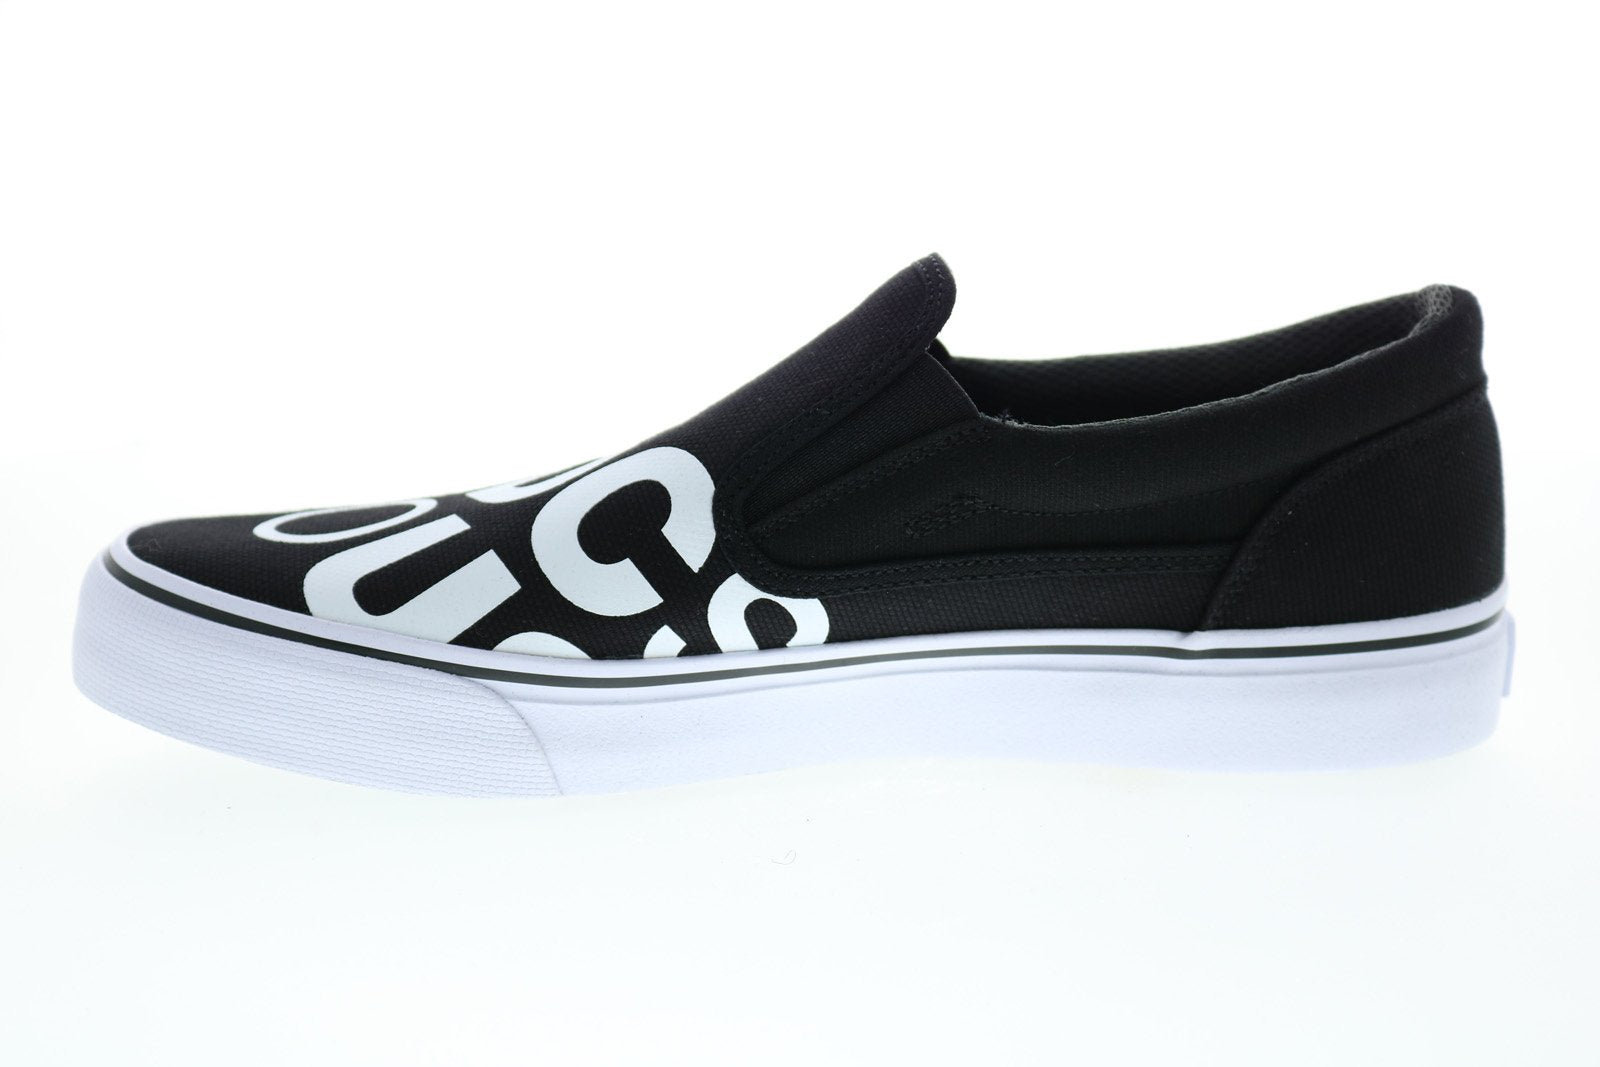 DC Trase Slip On Sp ADYS300185 Mens Black Skate Inspired Sneakers Shoe ...